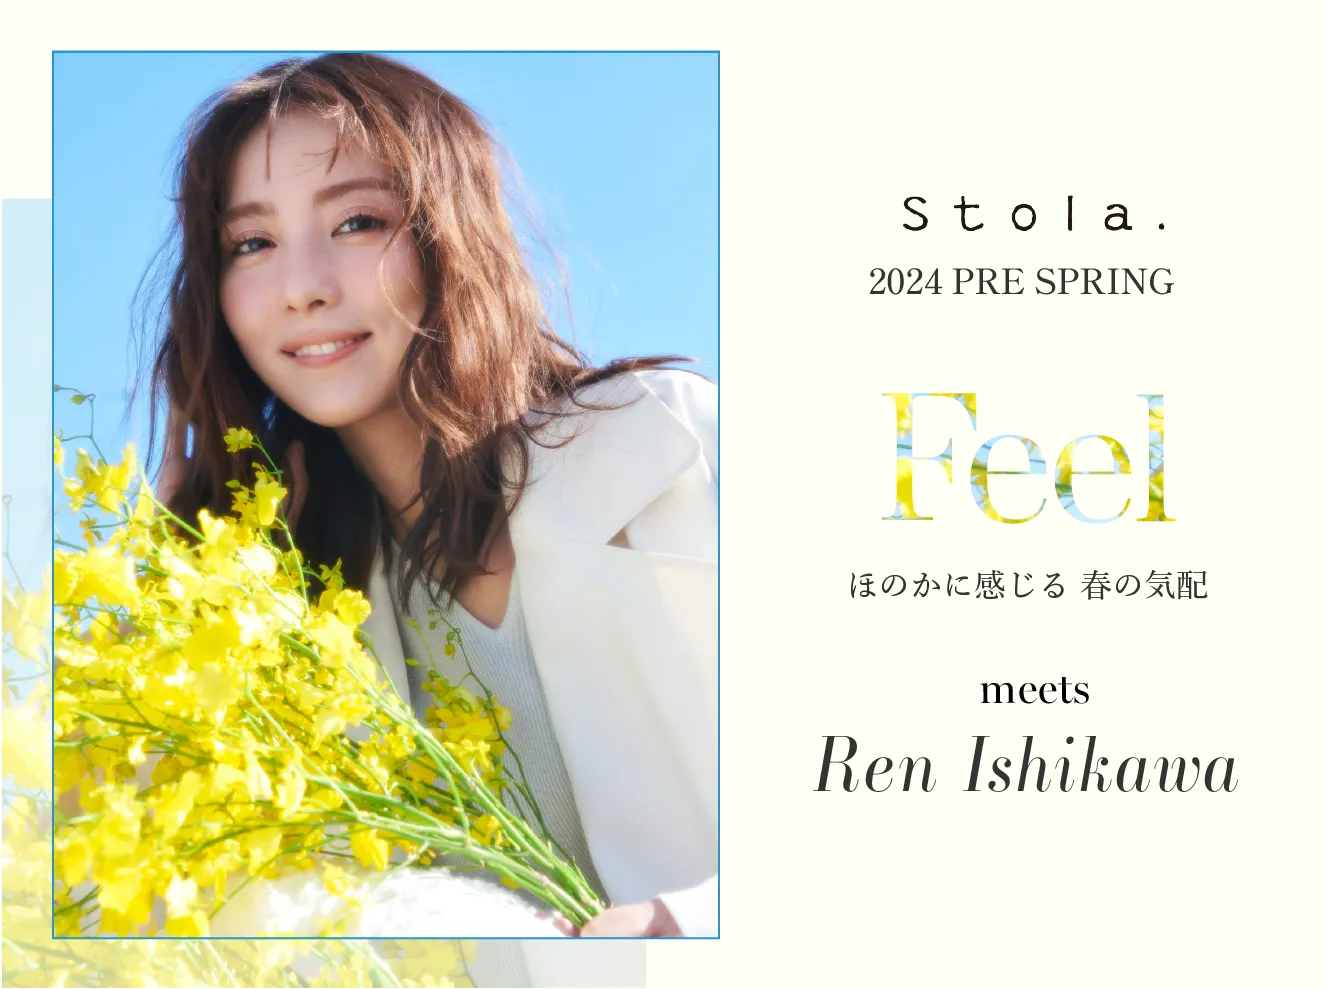 Feel ほのかに感じる 春の気配 meets Ren Ishikawa